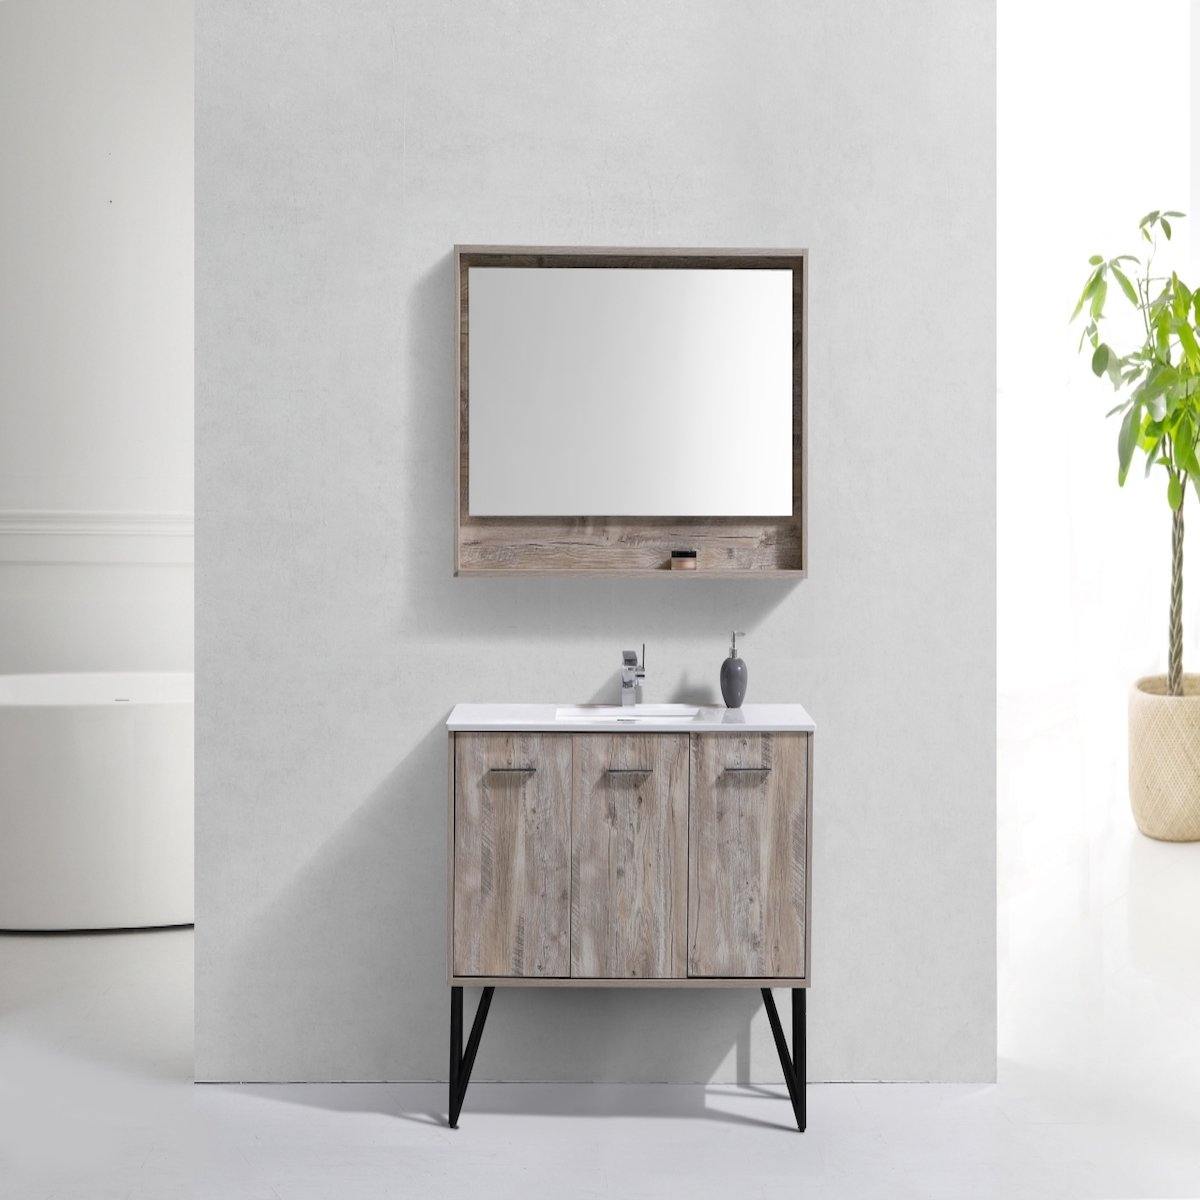 KubeBath Bosco 48" Nature Wood Freestanding Single Vanity with Quartz Countertop KB48-NW in Bathroom #finish_nature wood